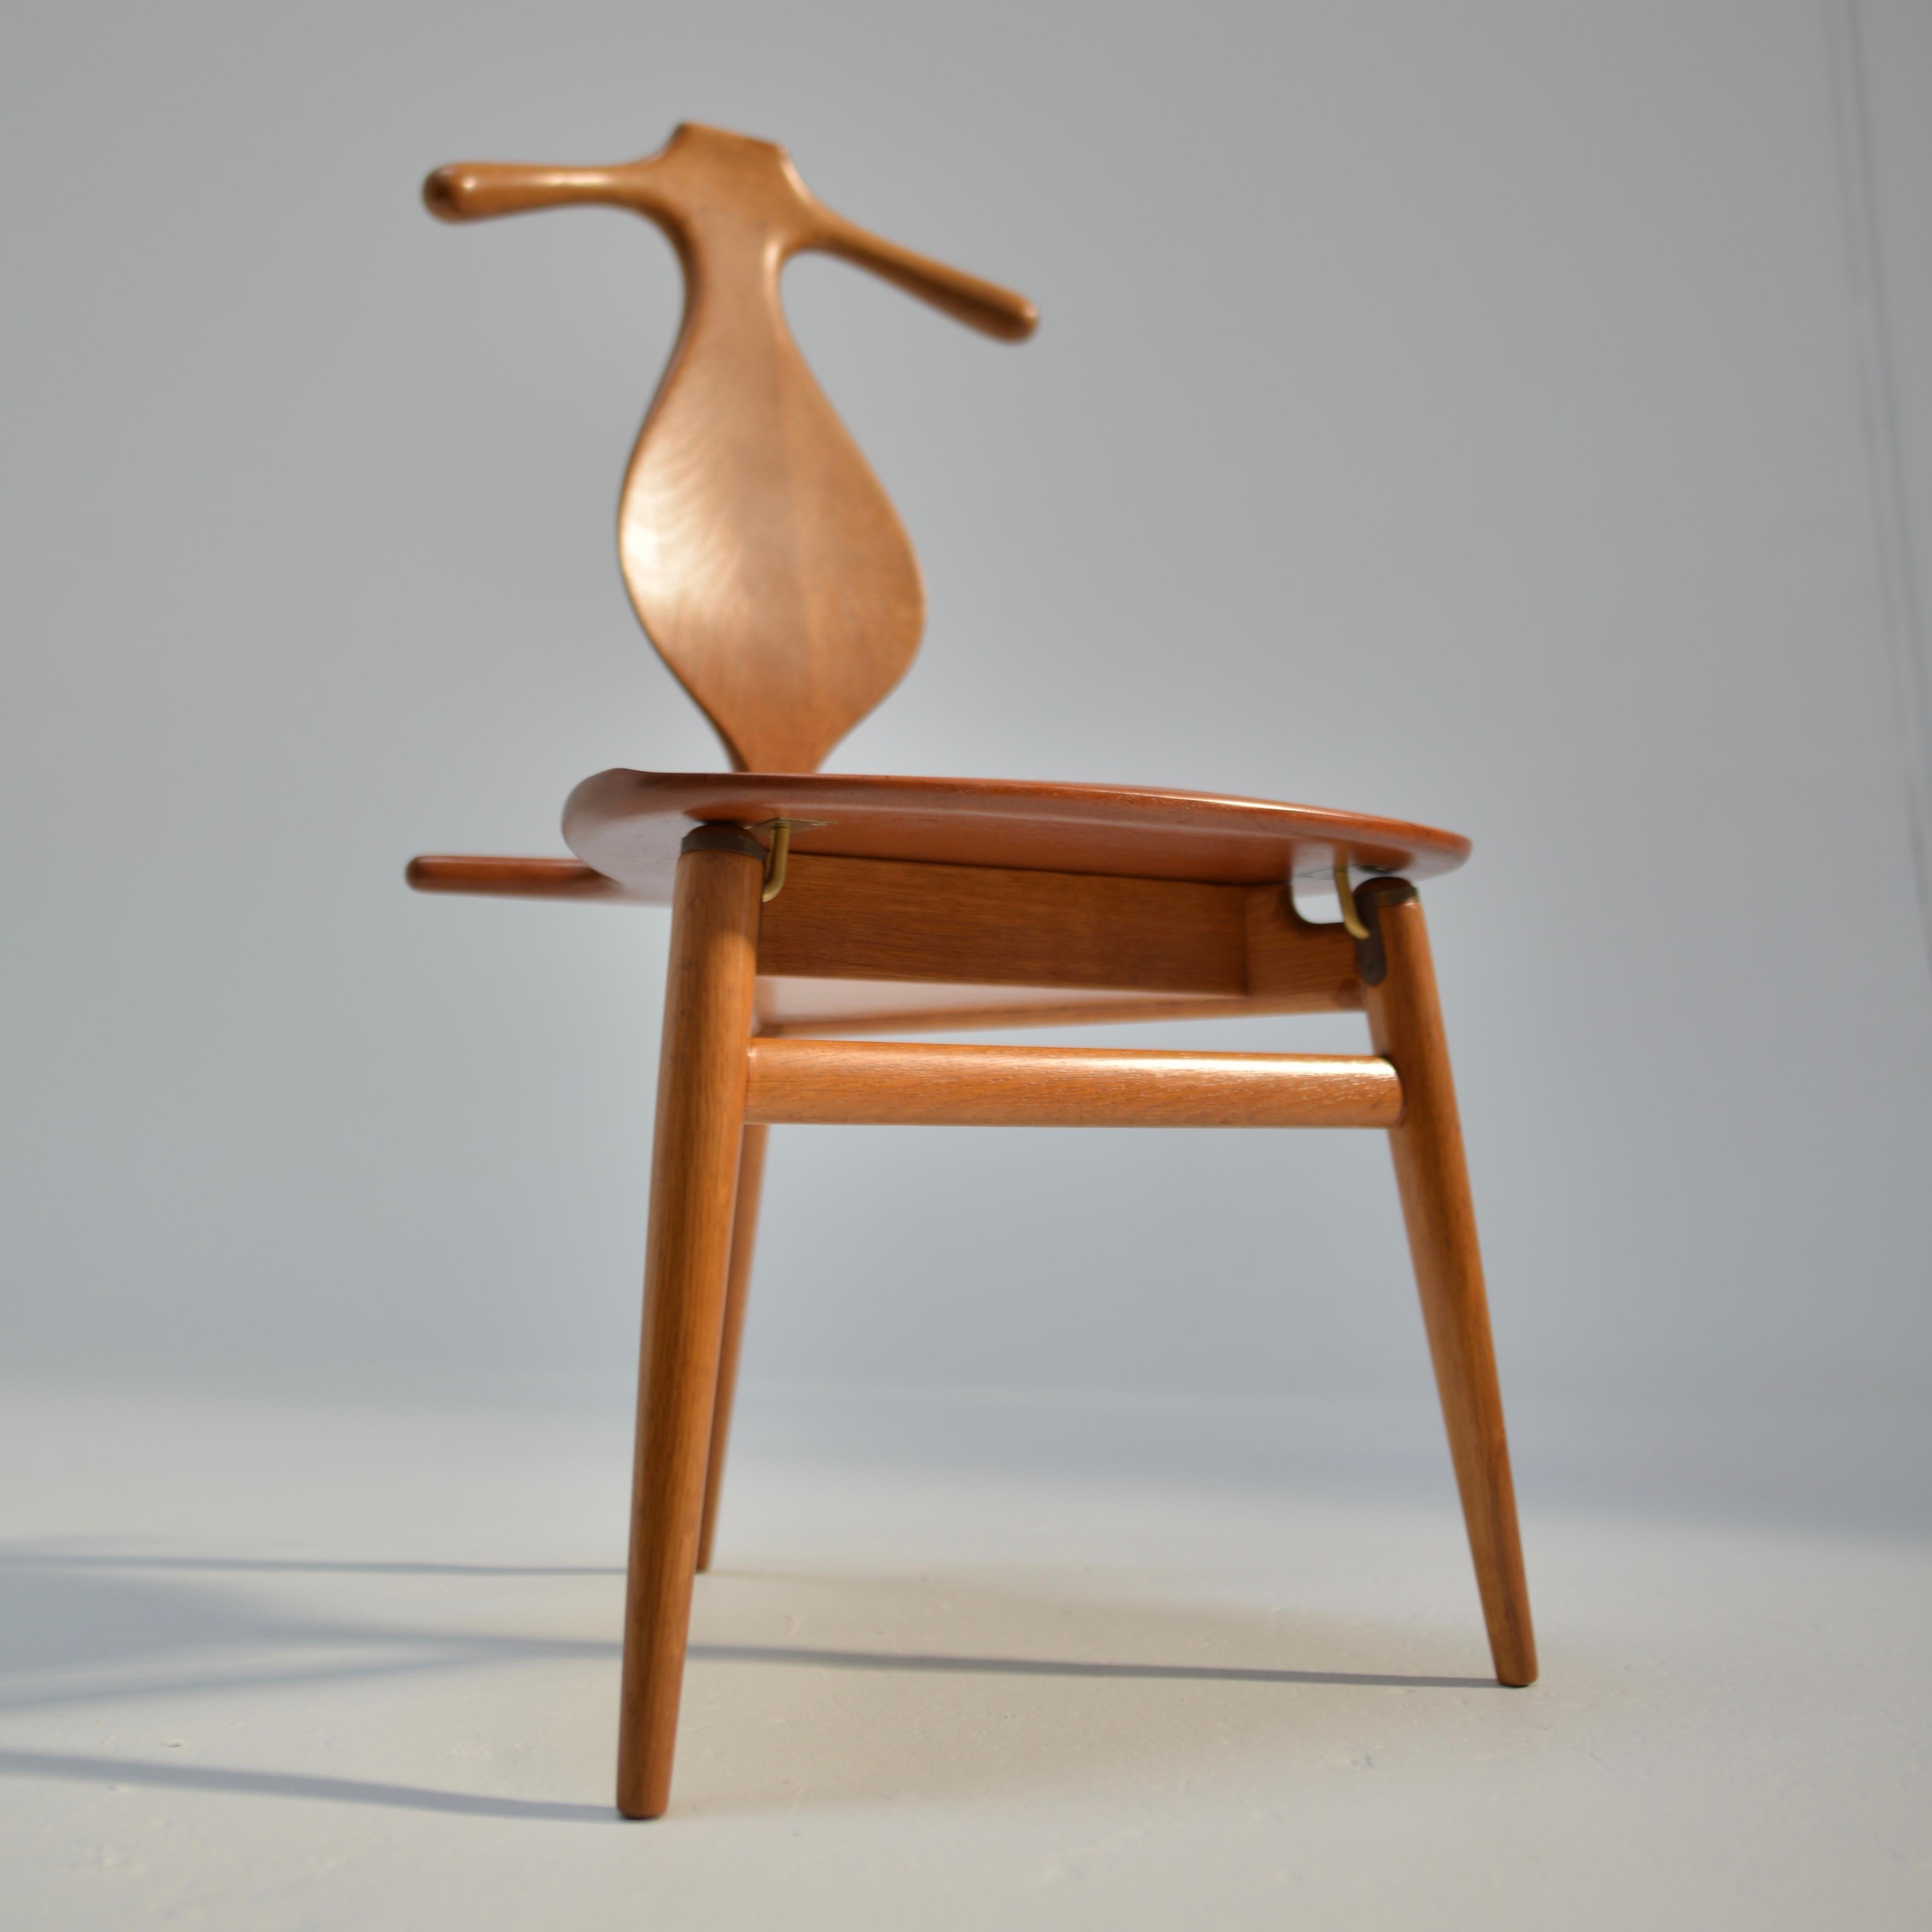 This is a rare original Hans Wegner for Johannes Hansen 'Valet' chair in excellent condition, circa 1953.